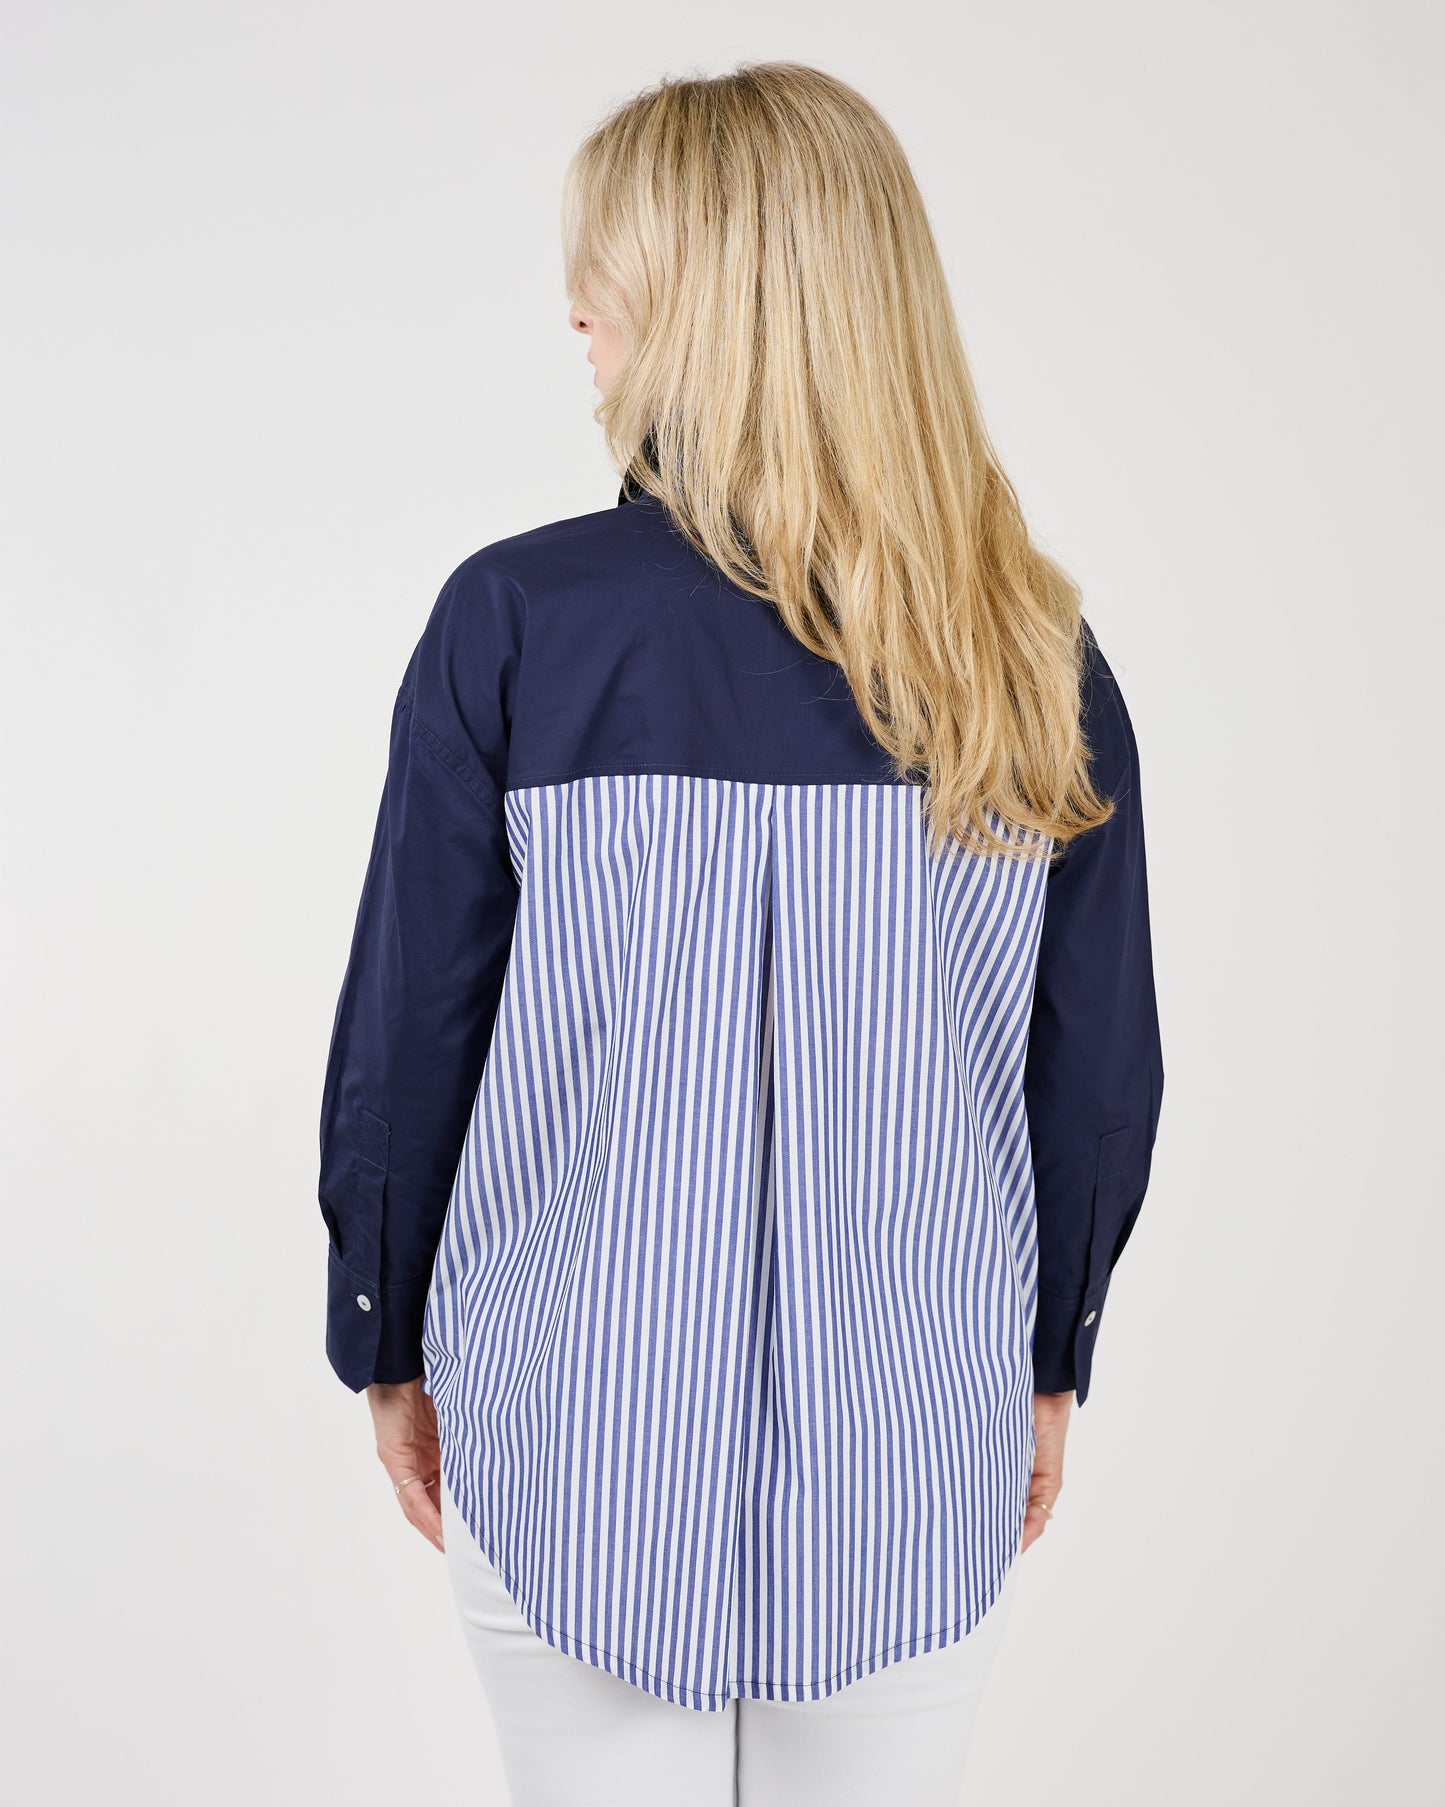 Cesme Shirt in Navy Stripe Cotton Poplin by Shannon Passero